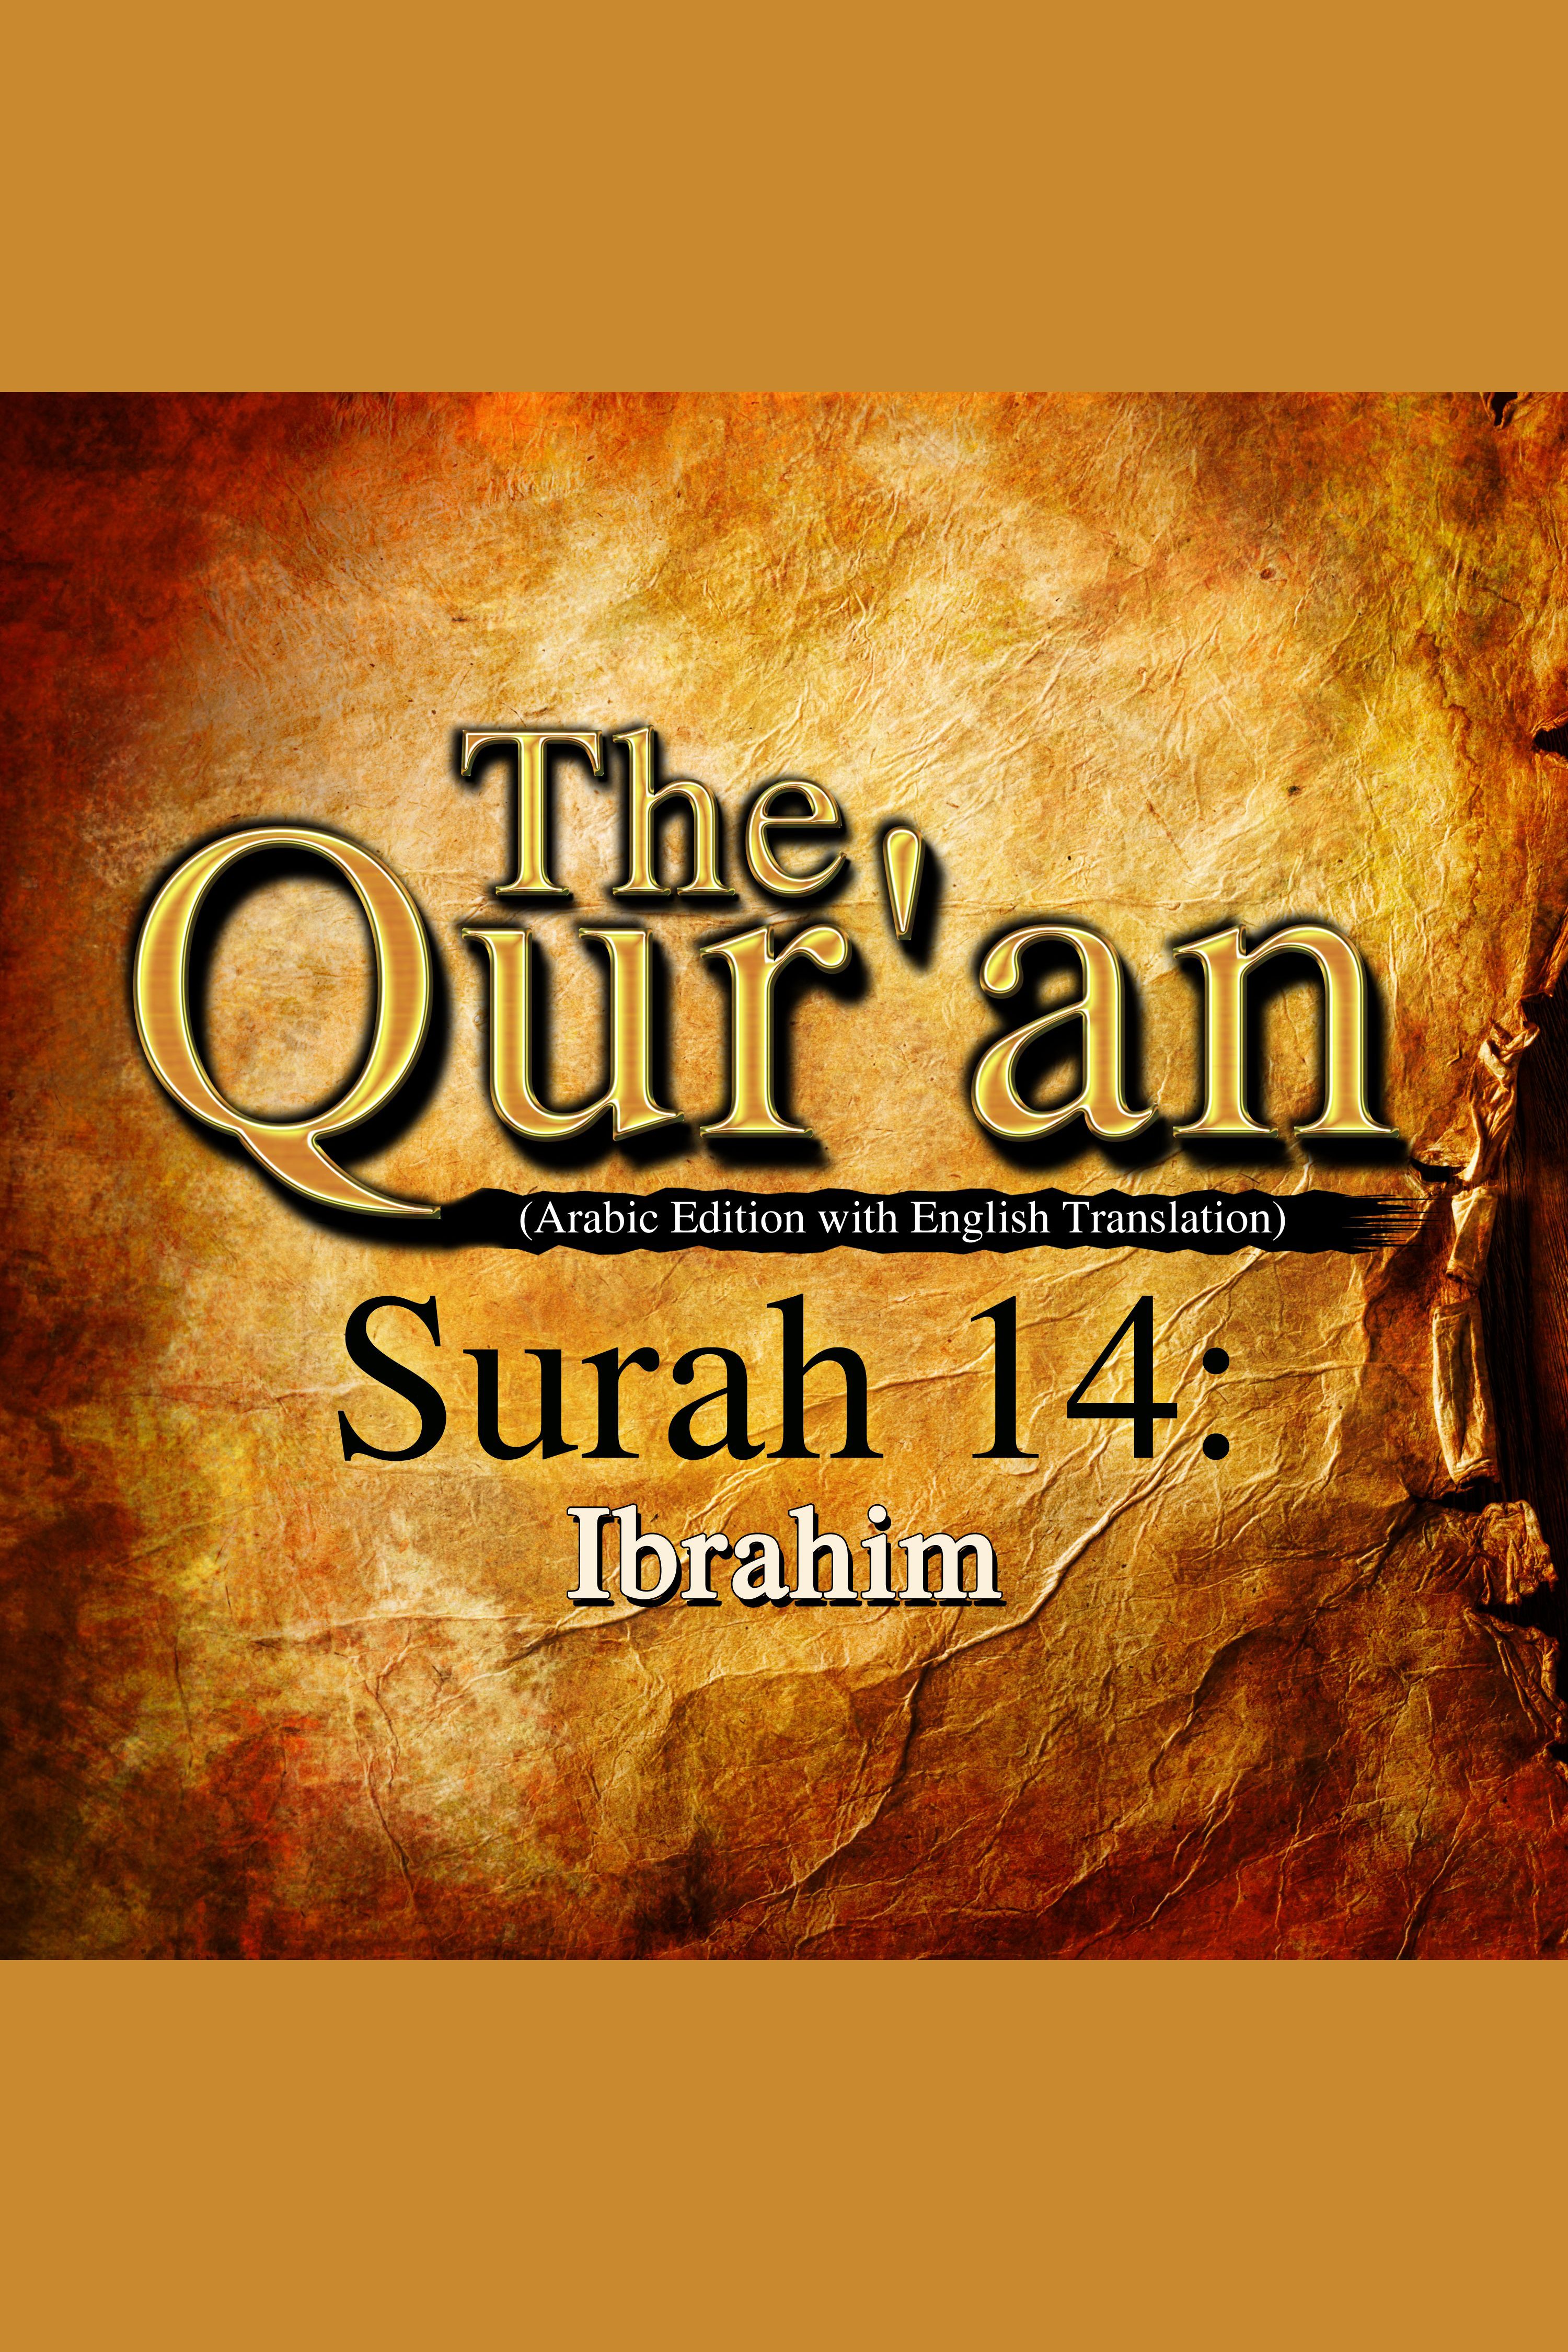 The Qur'an - Surah 14 - Ibrahim cover image